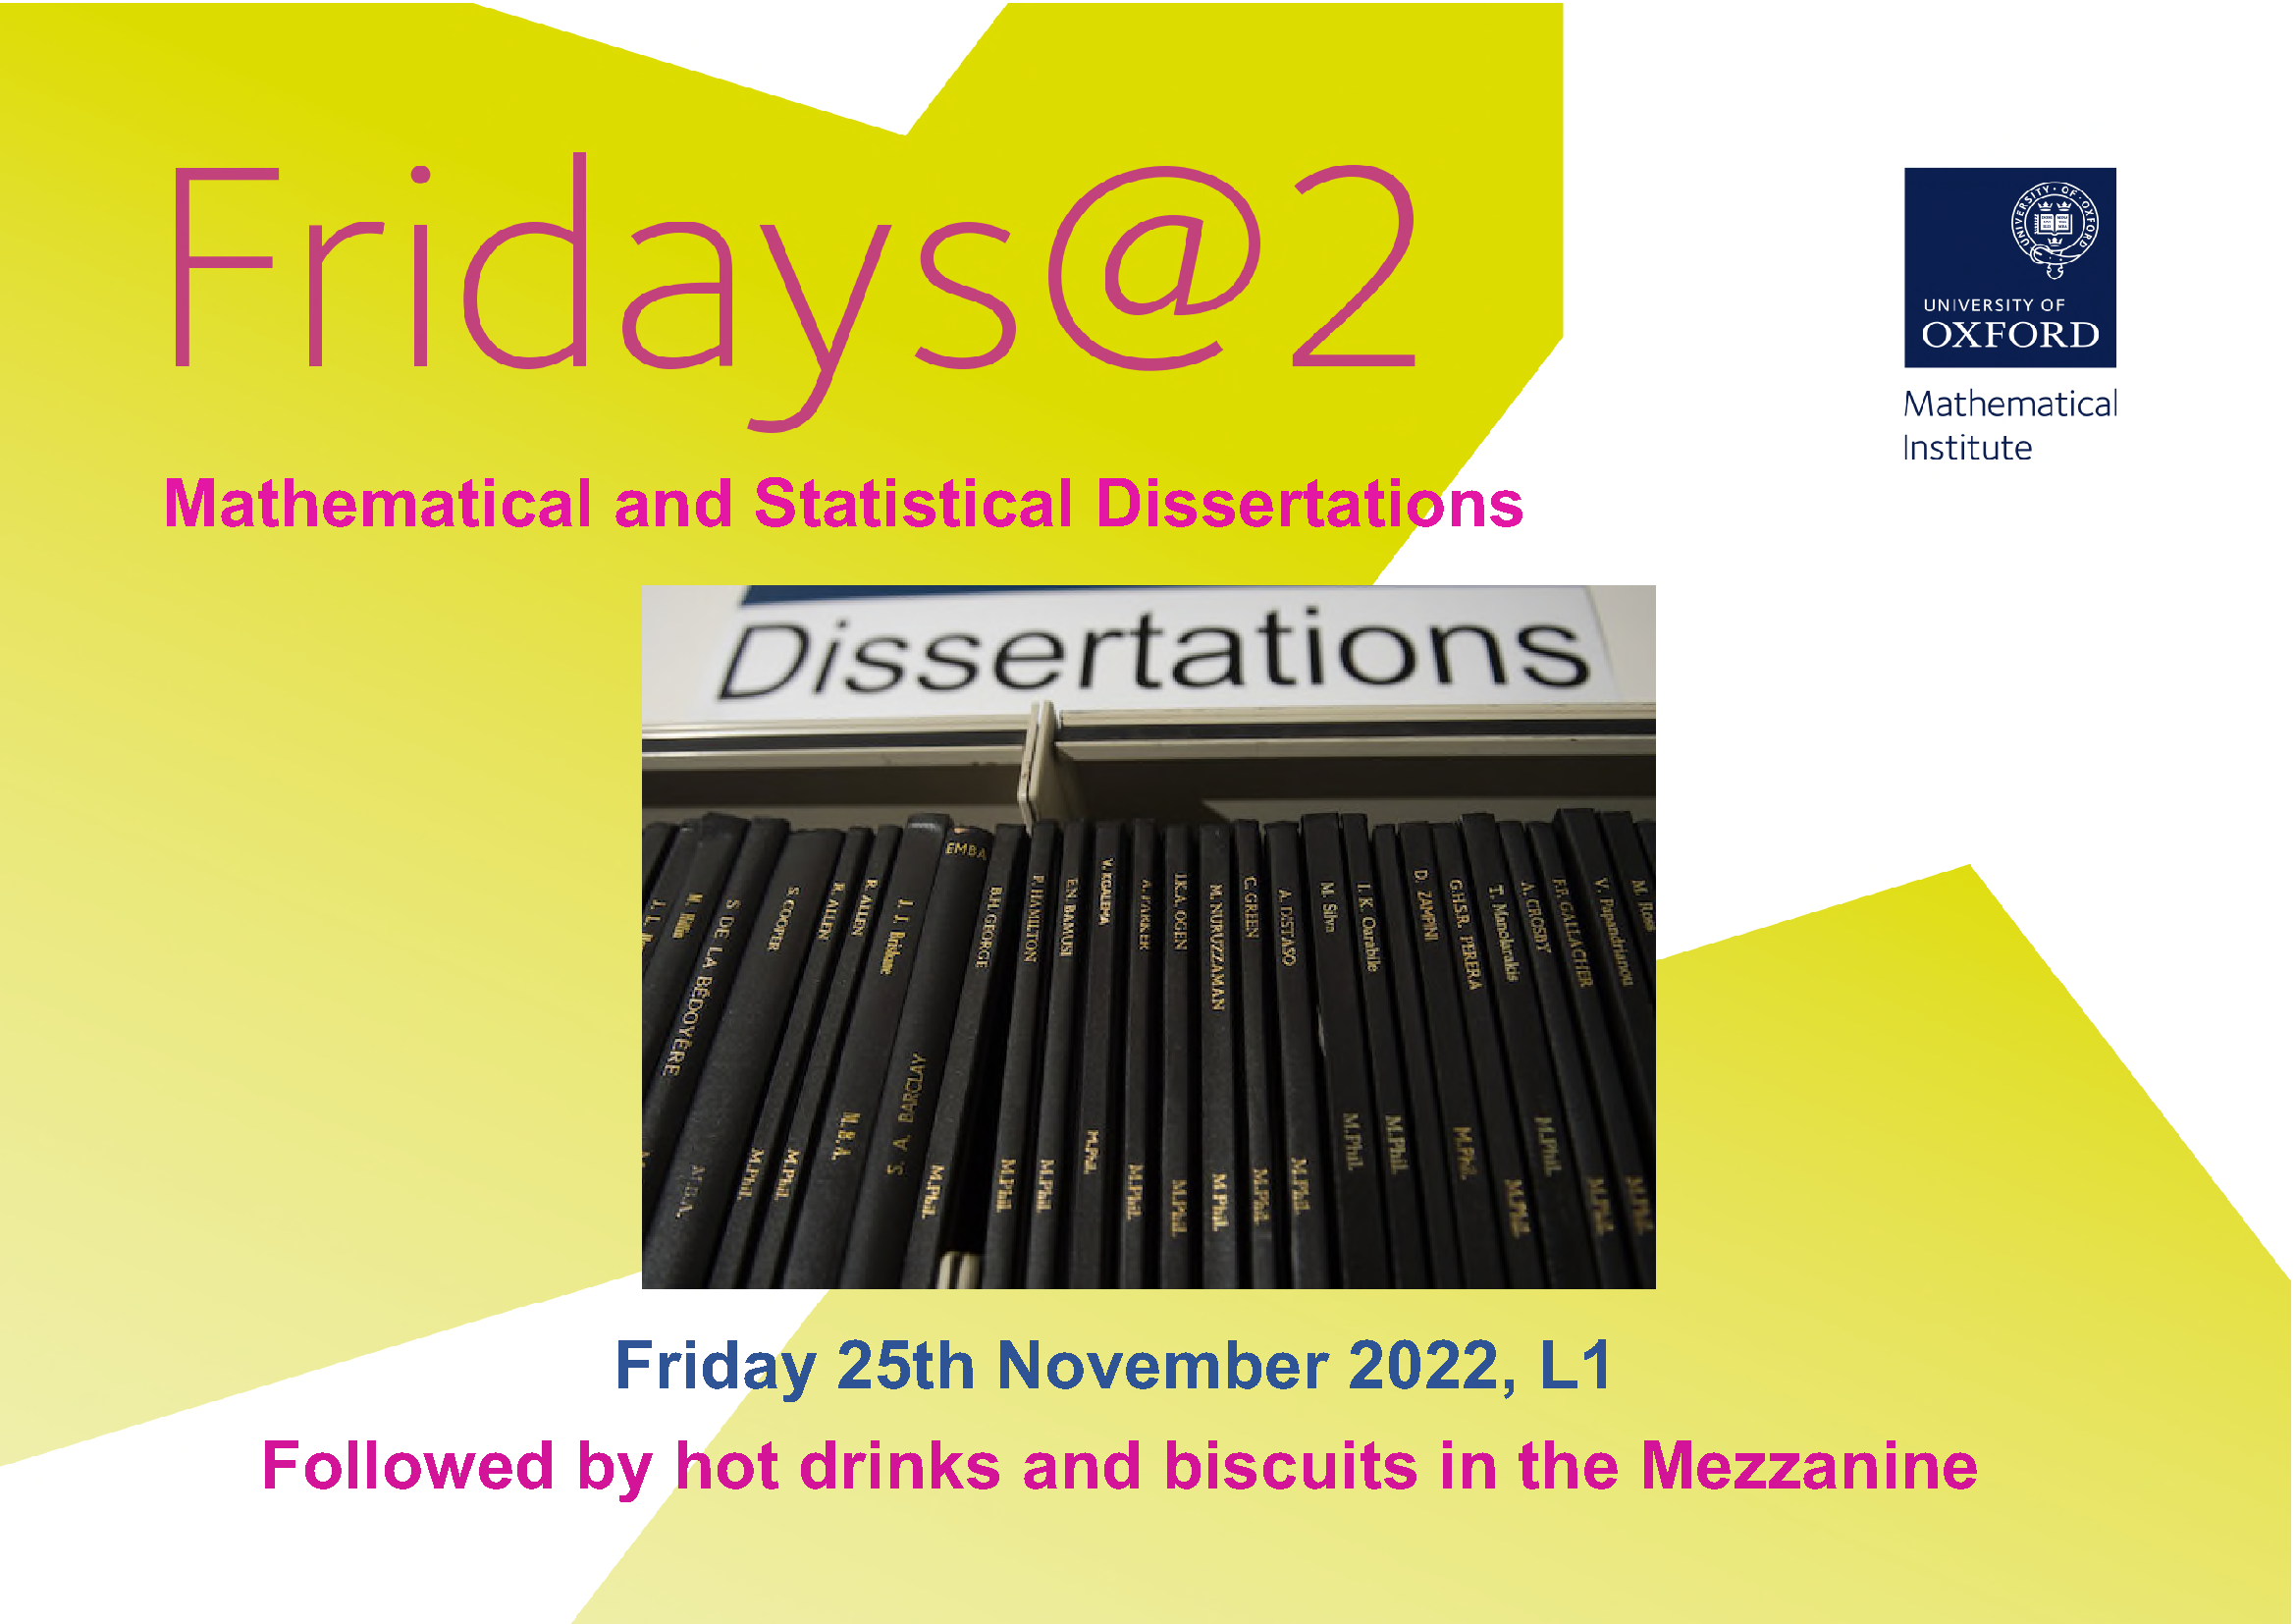 Fridays@2 promotional image of dissertations